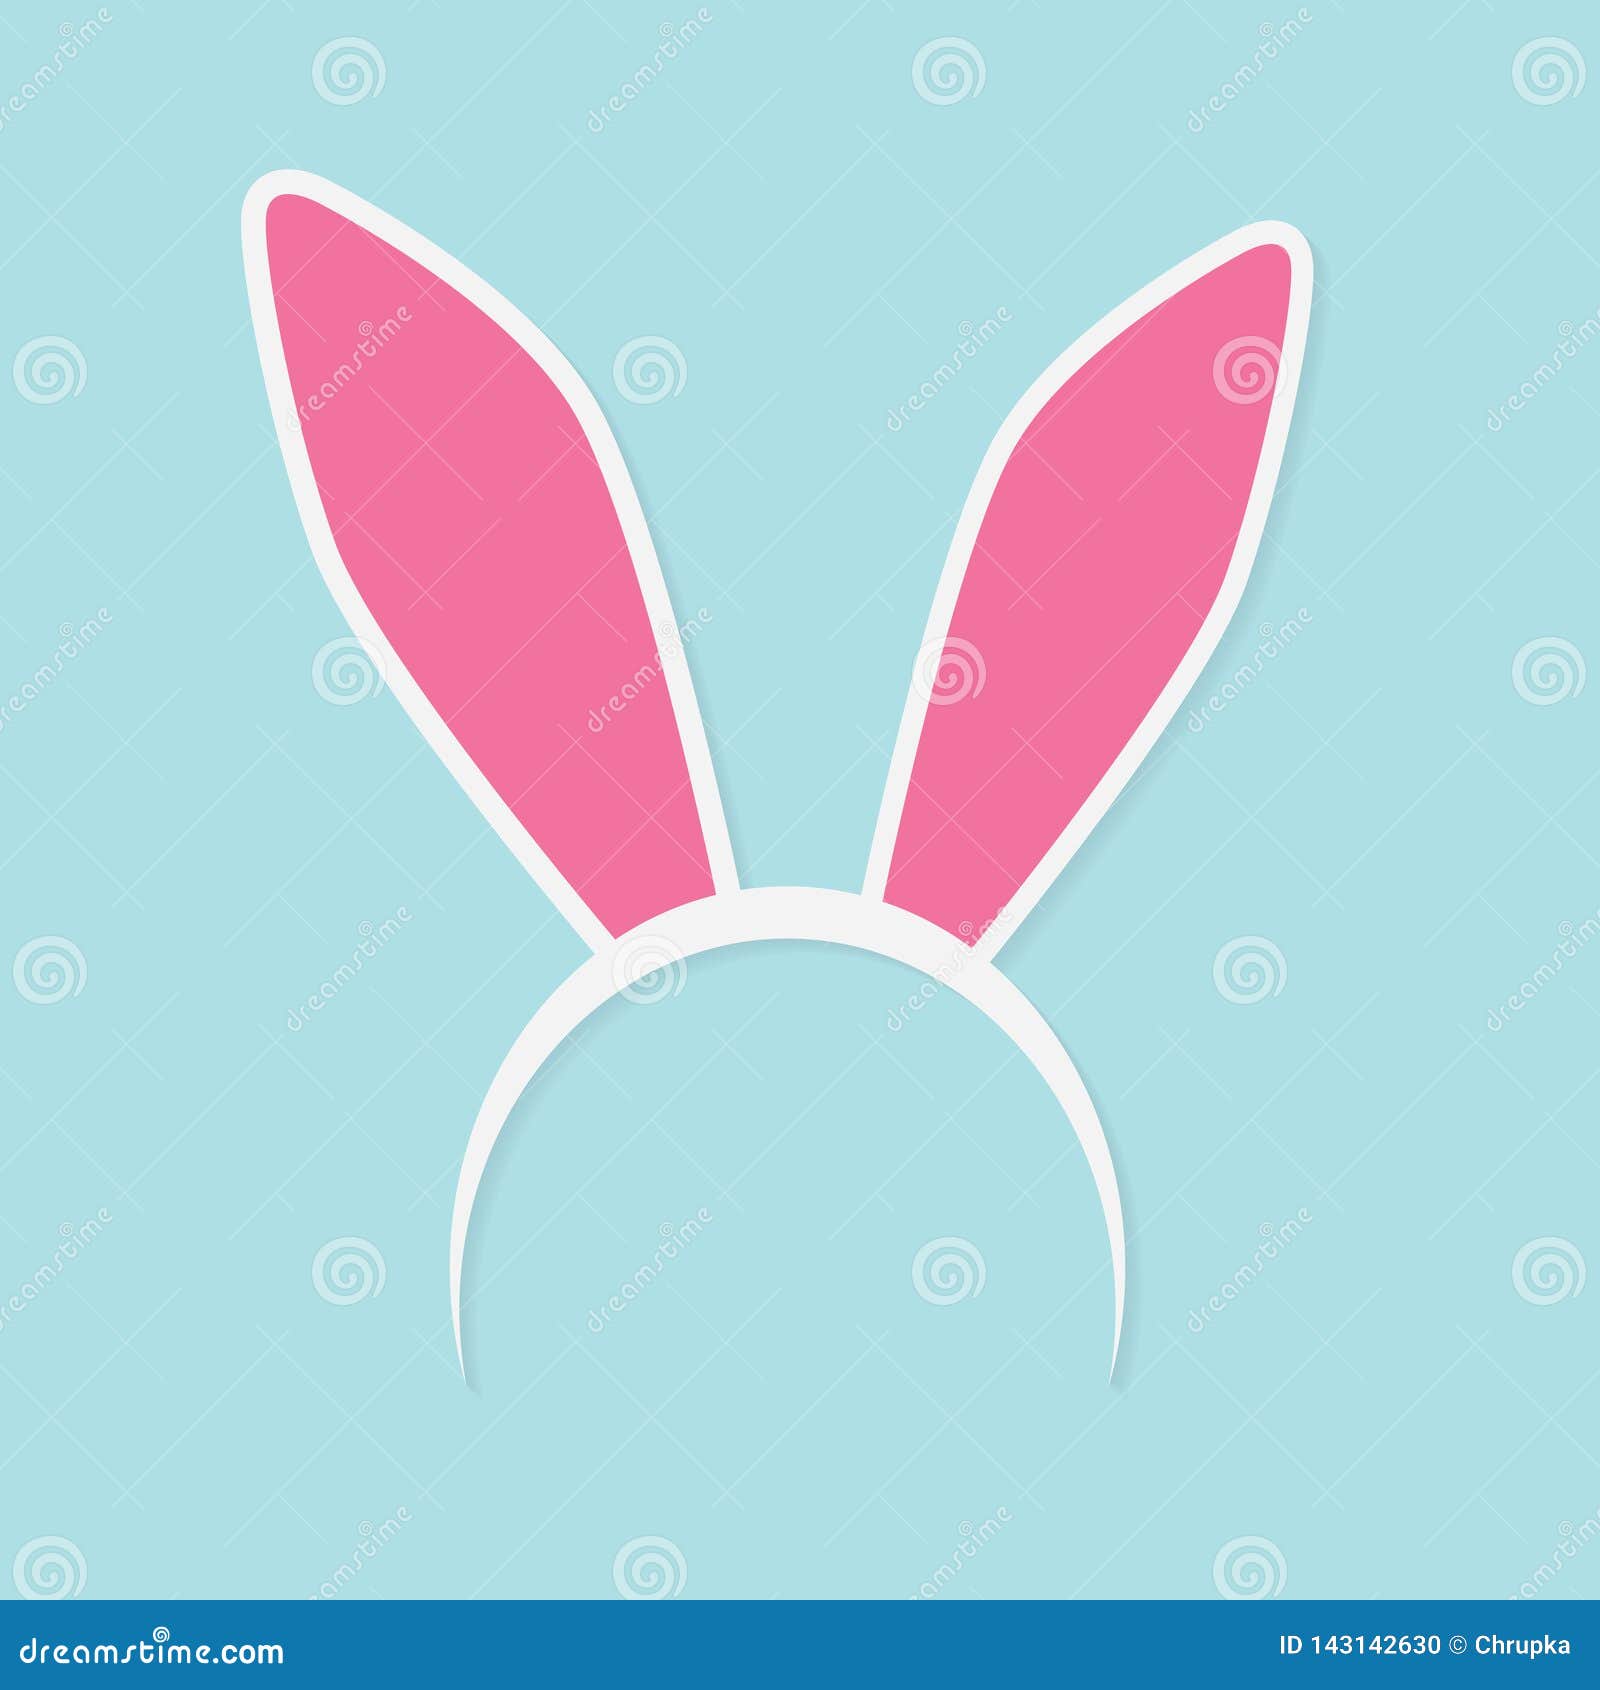 Bunny ears headband stock vector. Illustration of invitation - 143142630